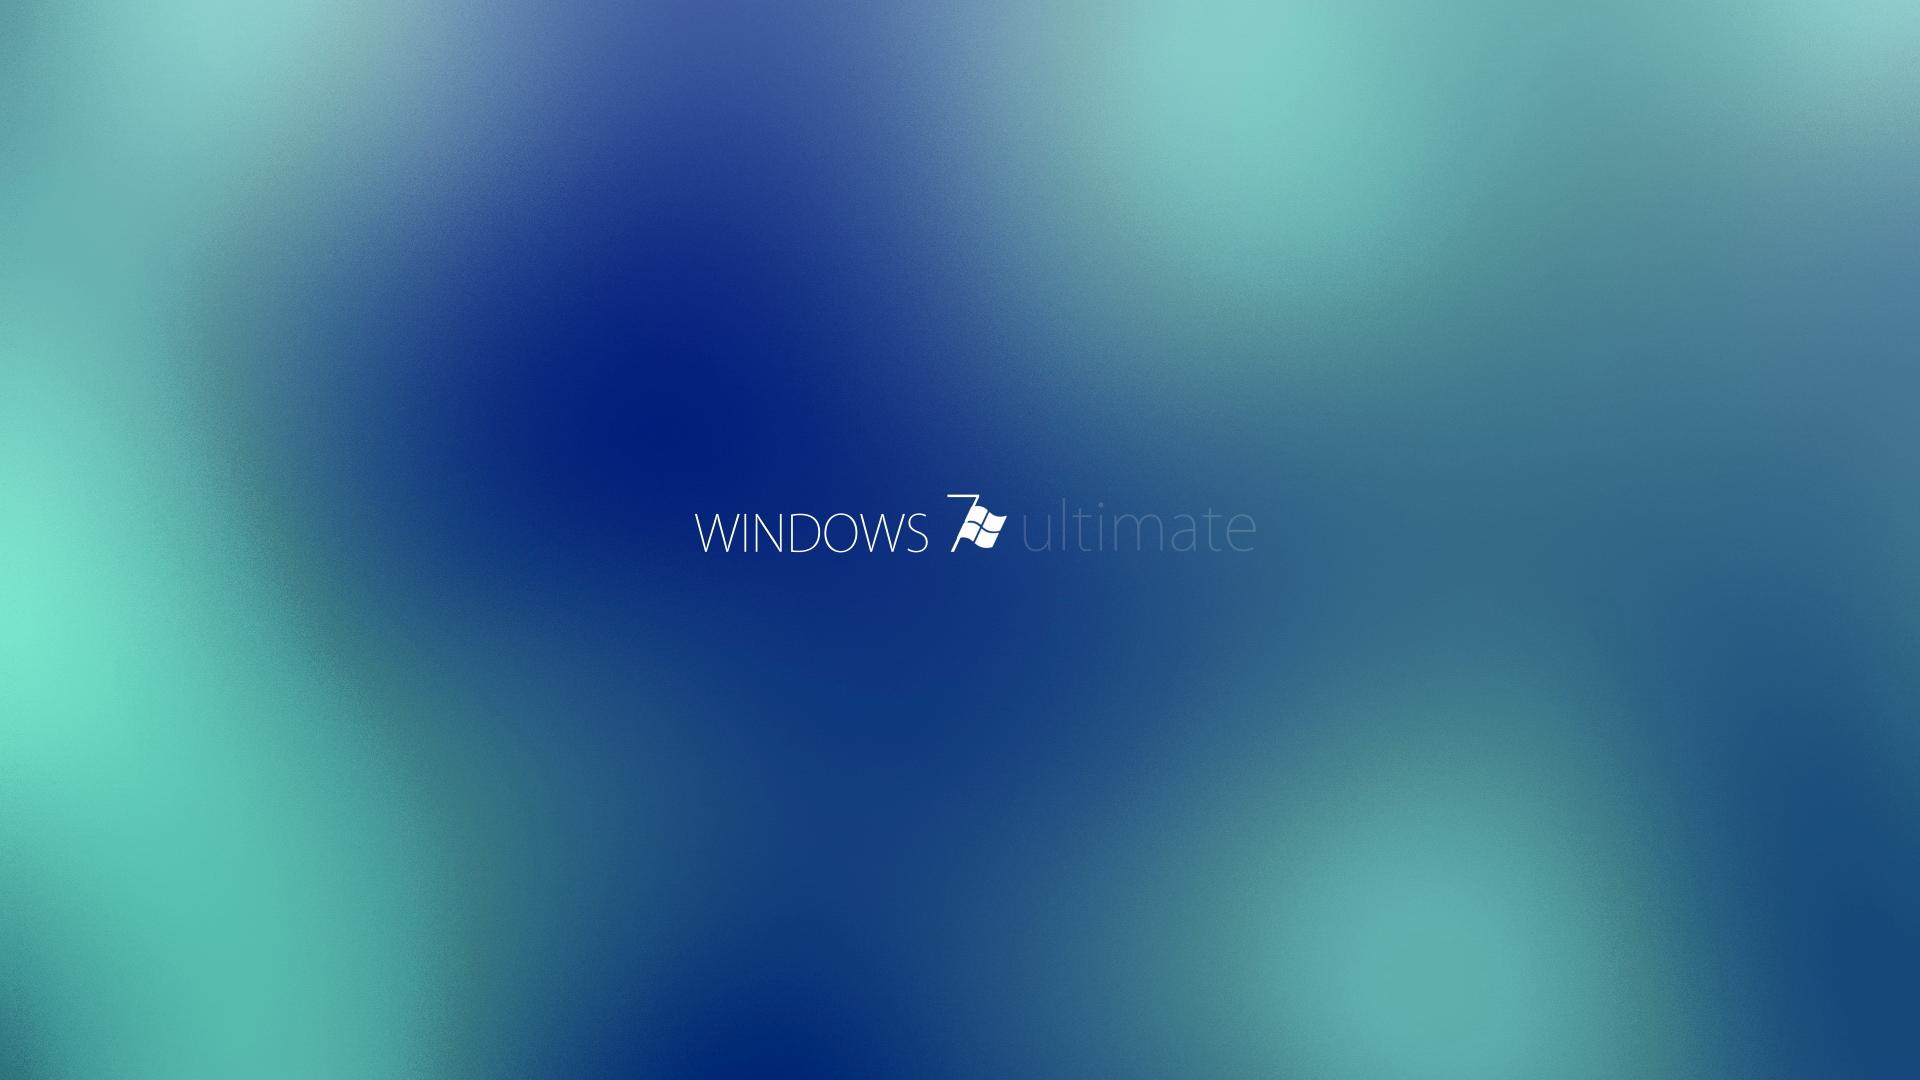 1920x1080 Cute Windows 7 ultimate desktop backgrounds wide wallpapers